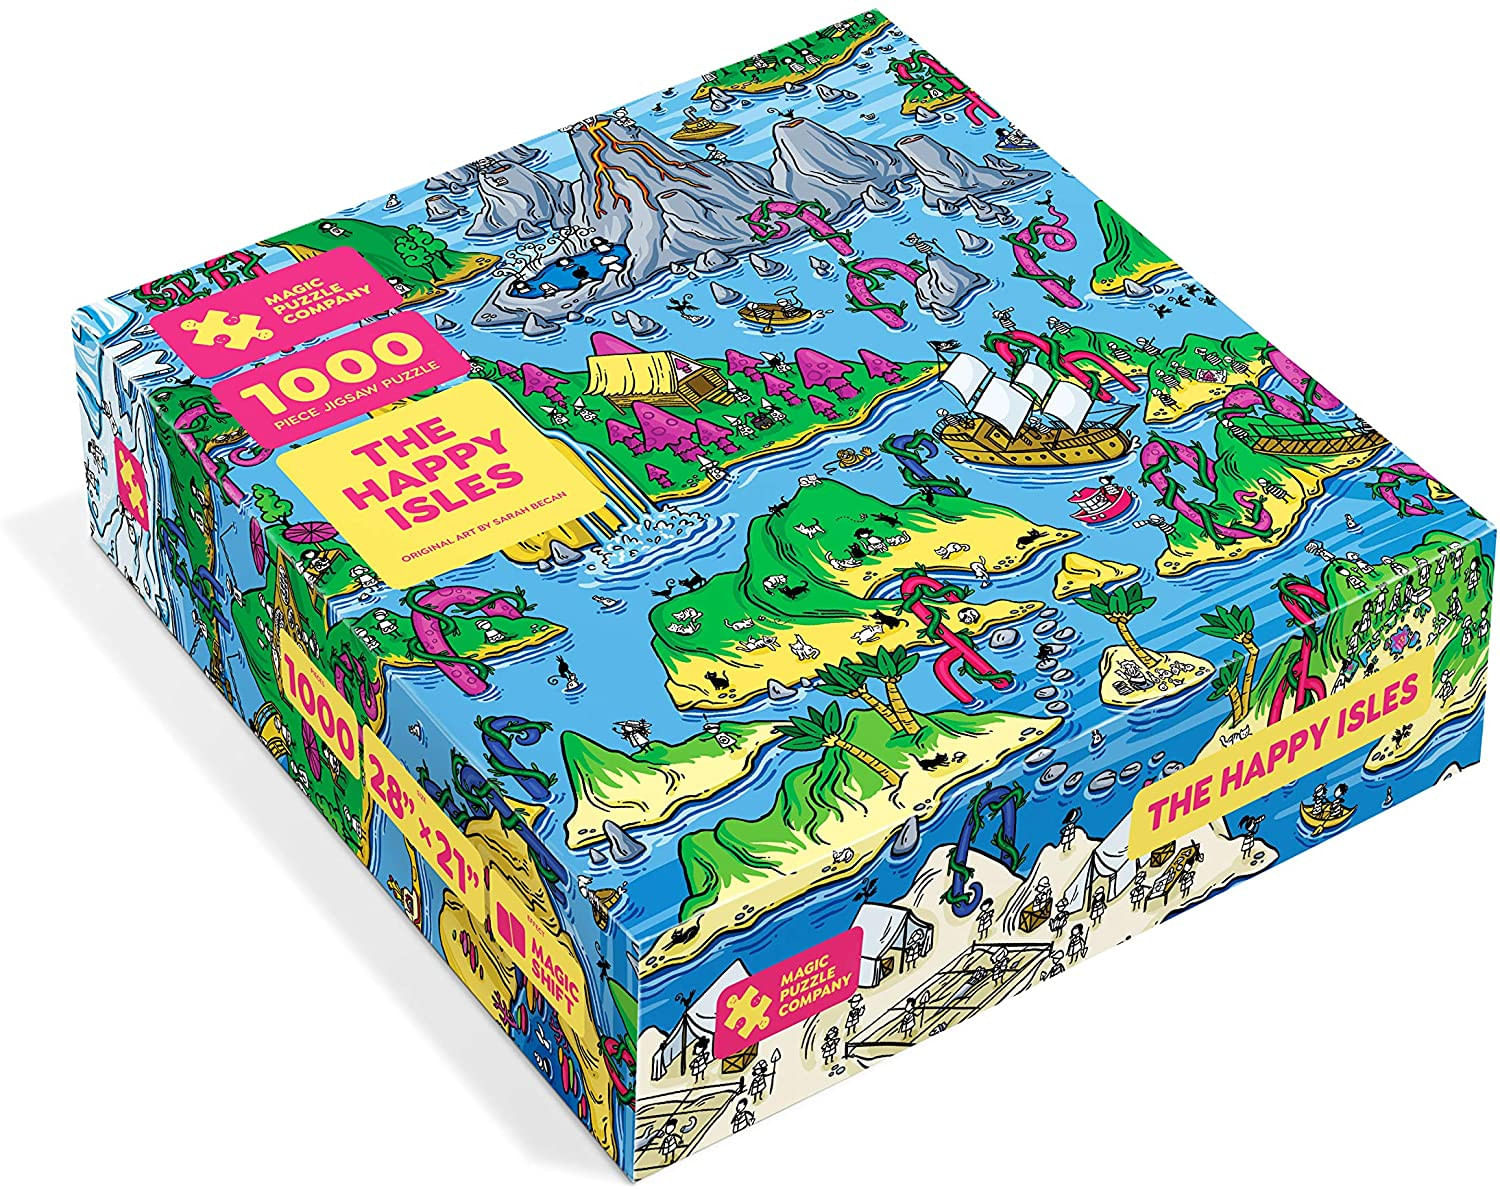 The Happy Isles • Quebra-cabeça De 1000 Peças Da The Magic Puzzle Company •&amp;nbsp,series One